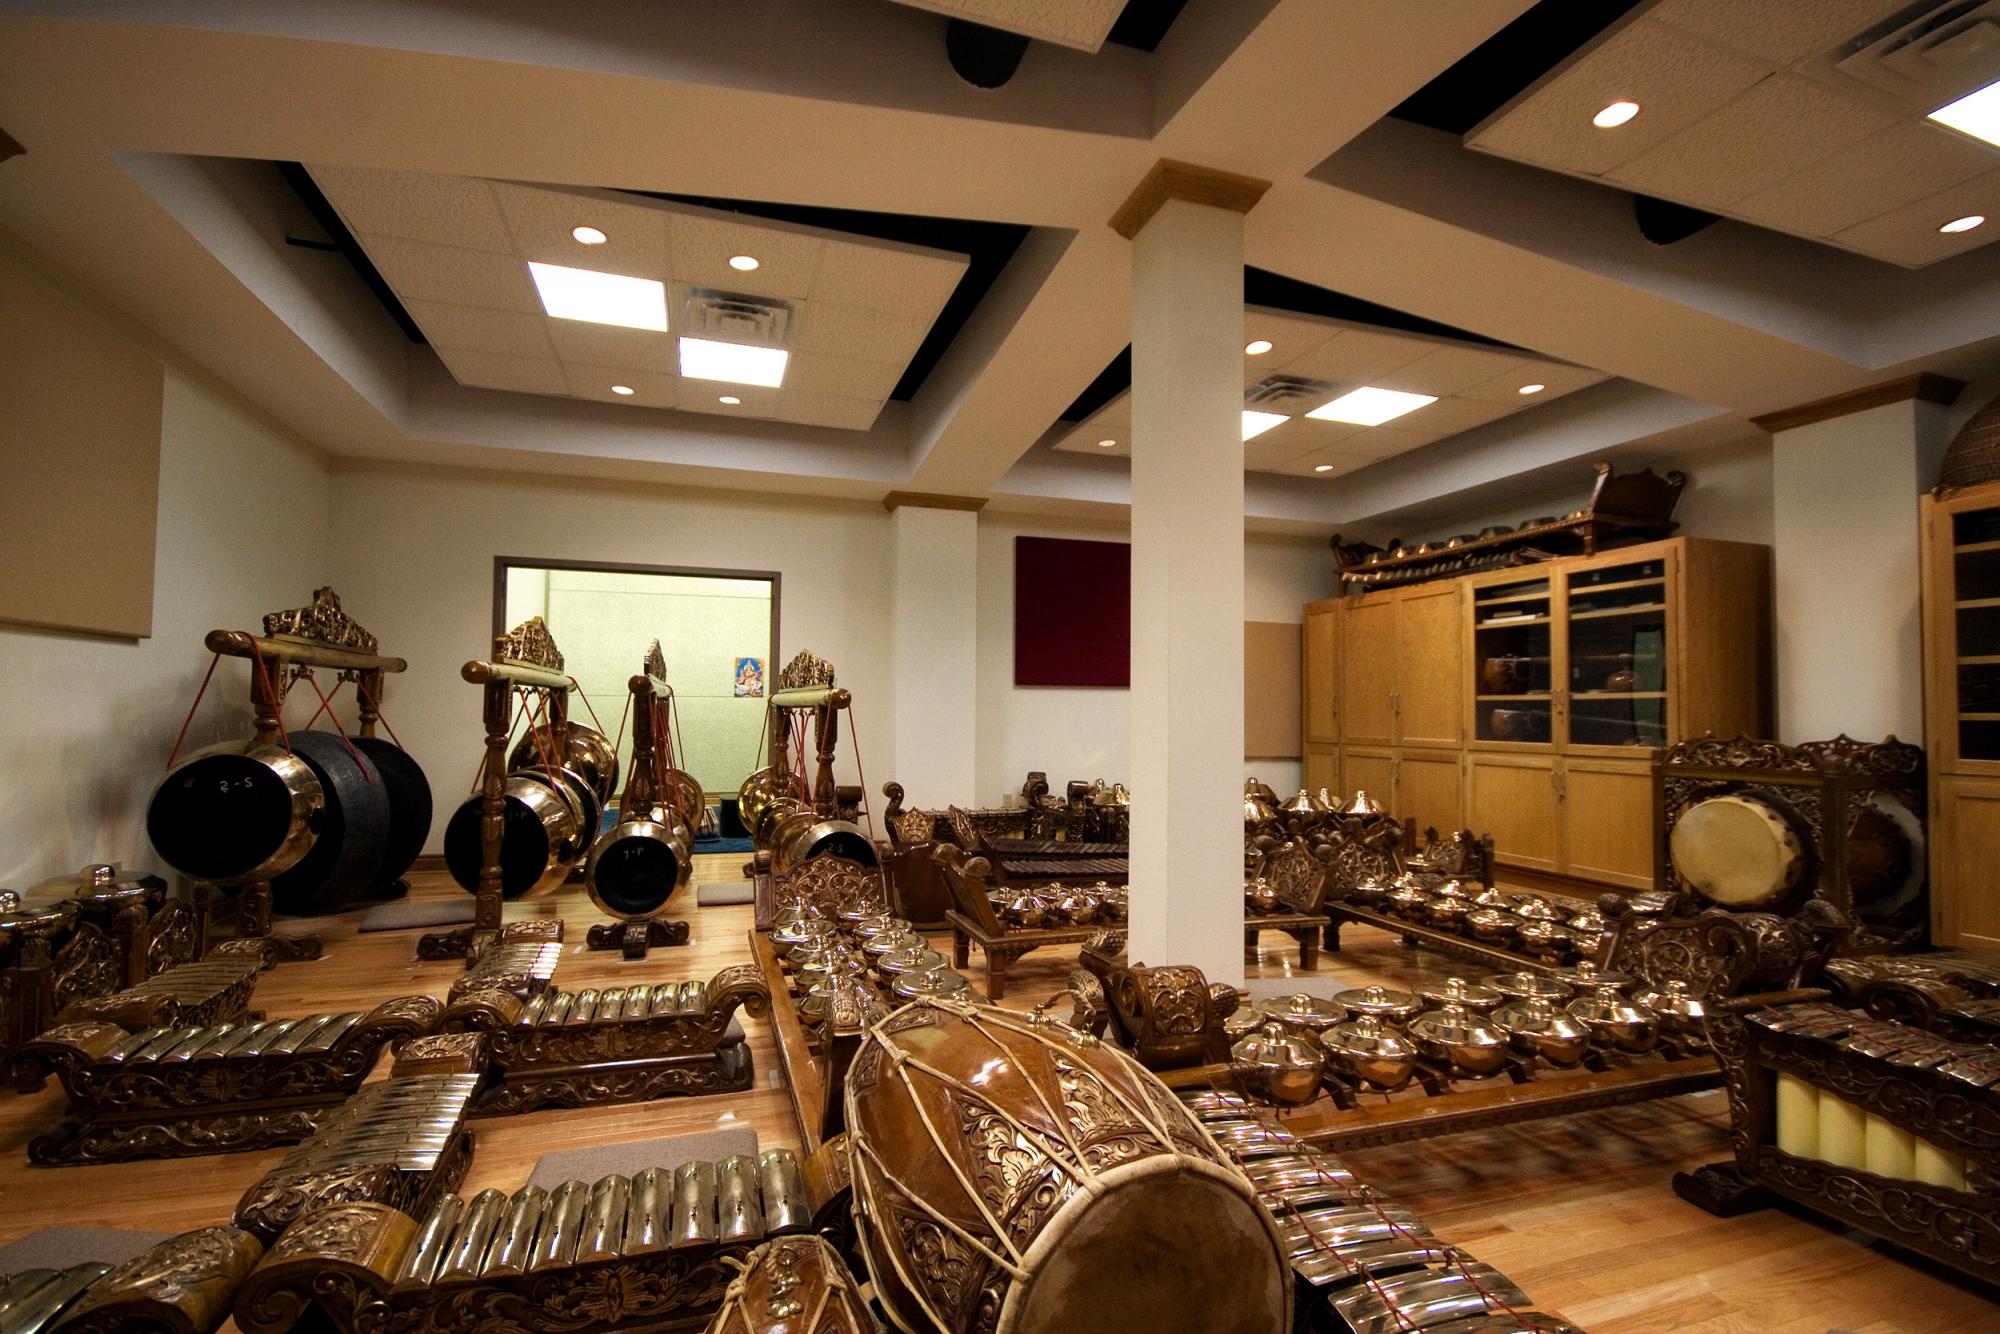 different instruments of the Gamelan arranged inside the Gamelan room